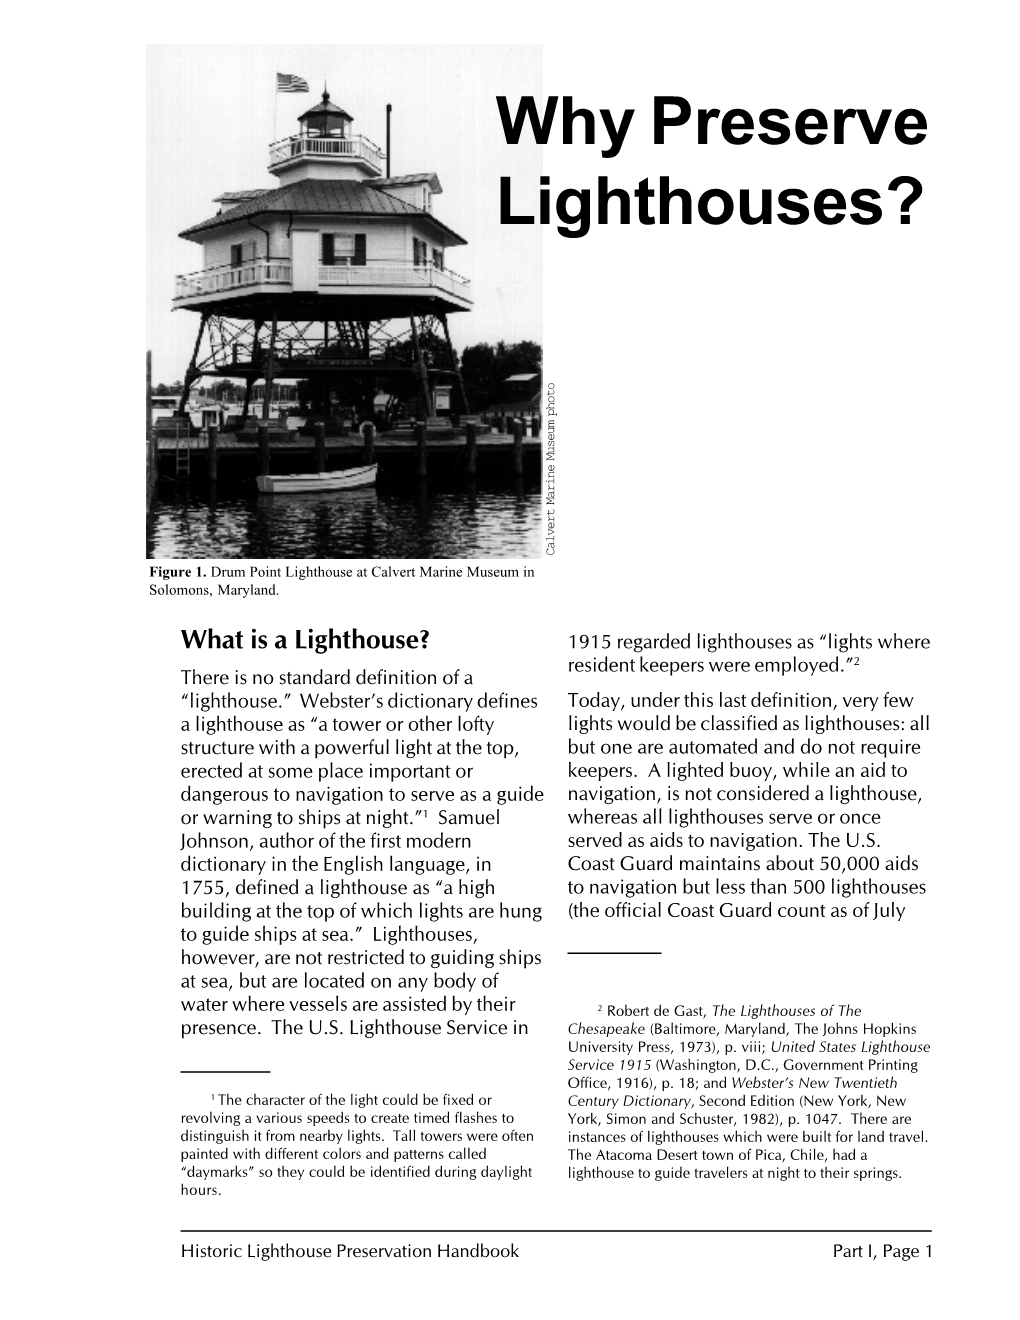 Why Preserve Lighthouses? Photo Museum Marine Calvert Figure 1